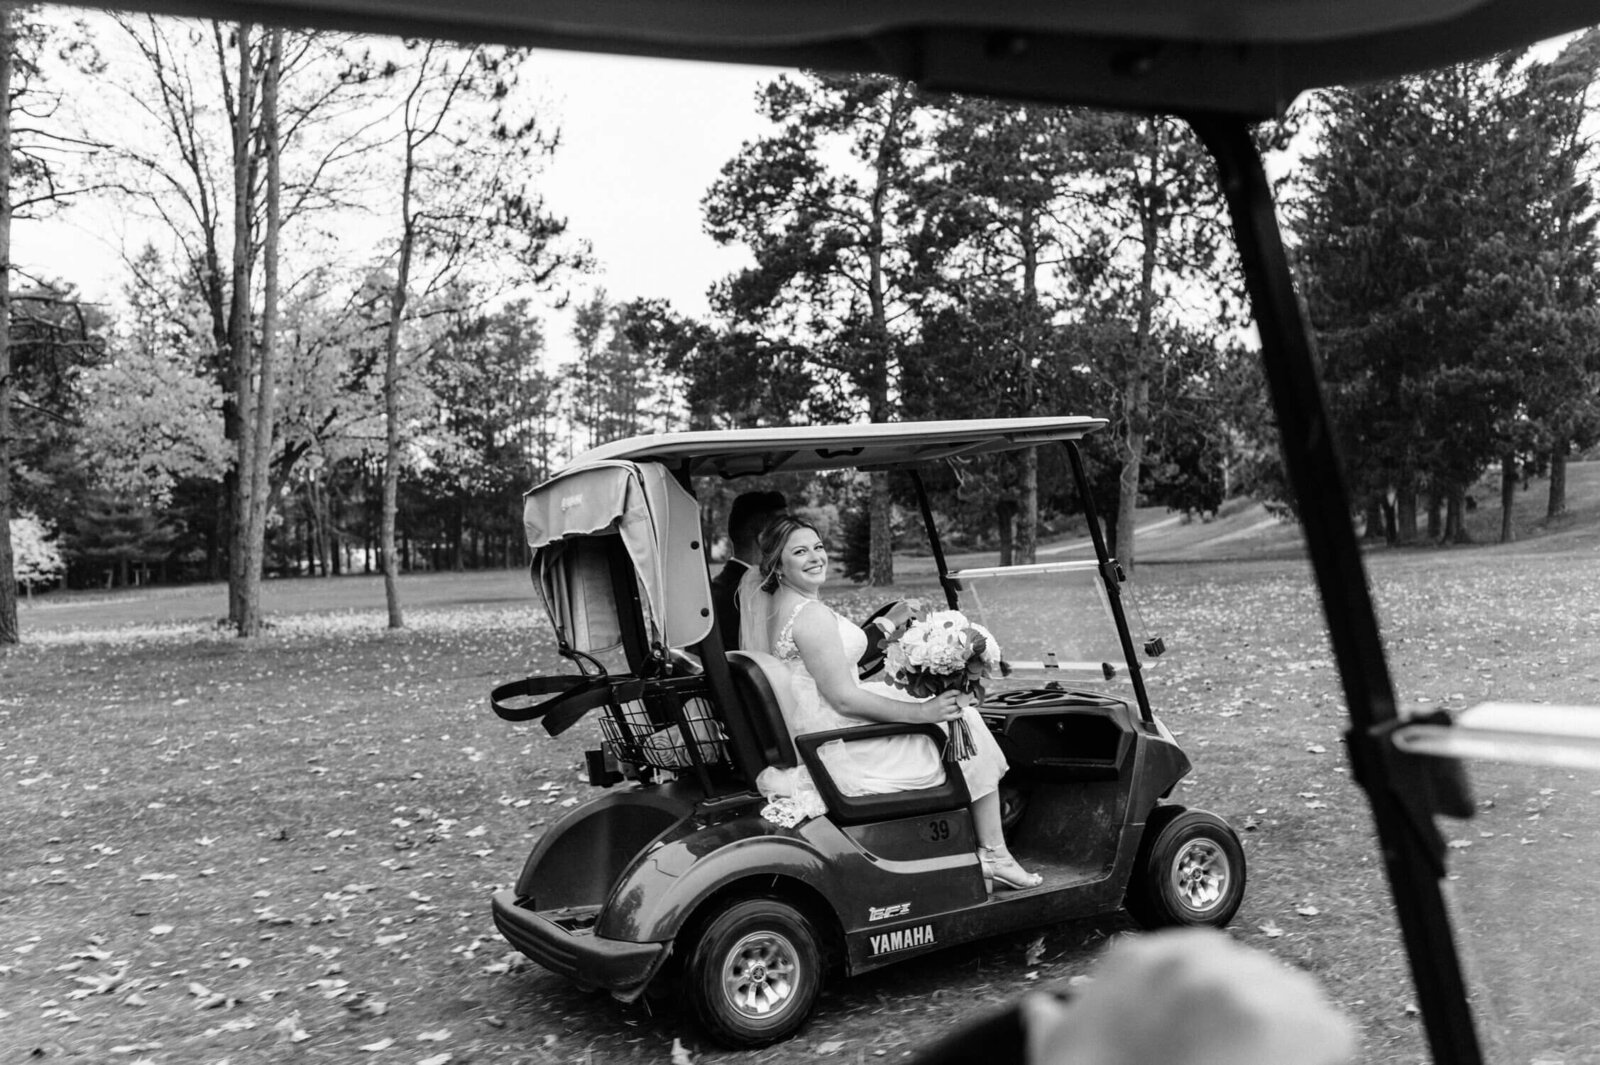 Wedding couple riding gold cart at Nova Scotia wedding.